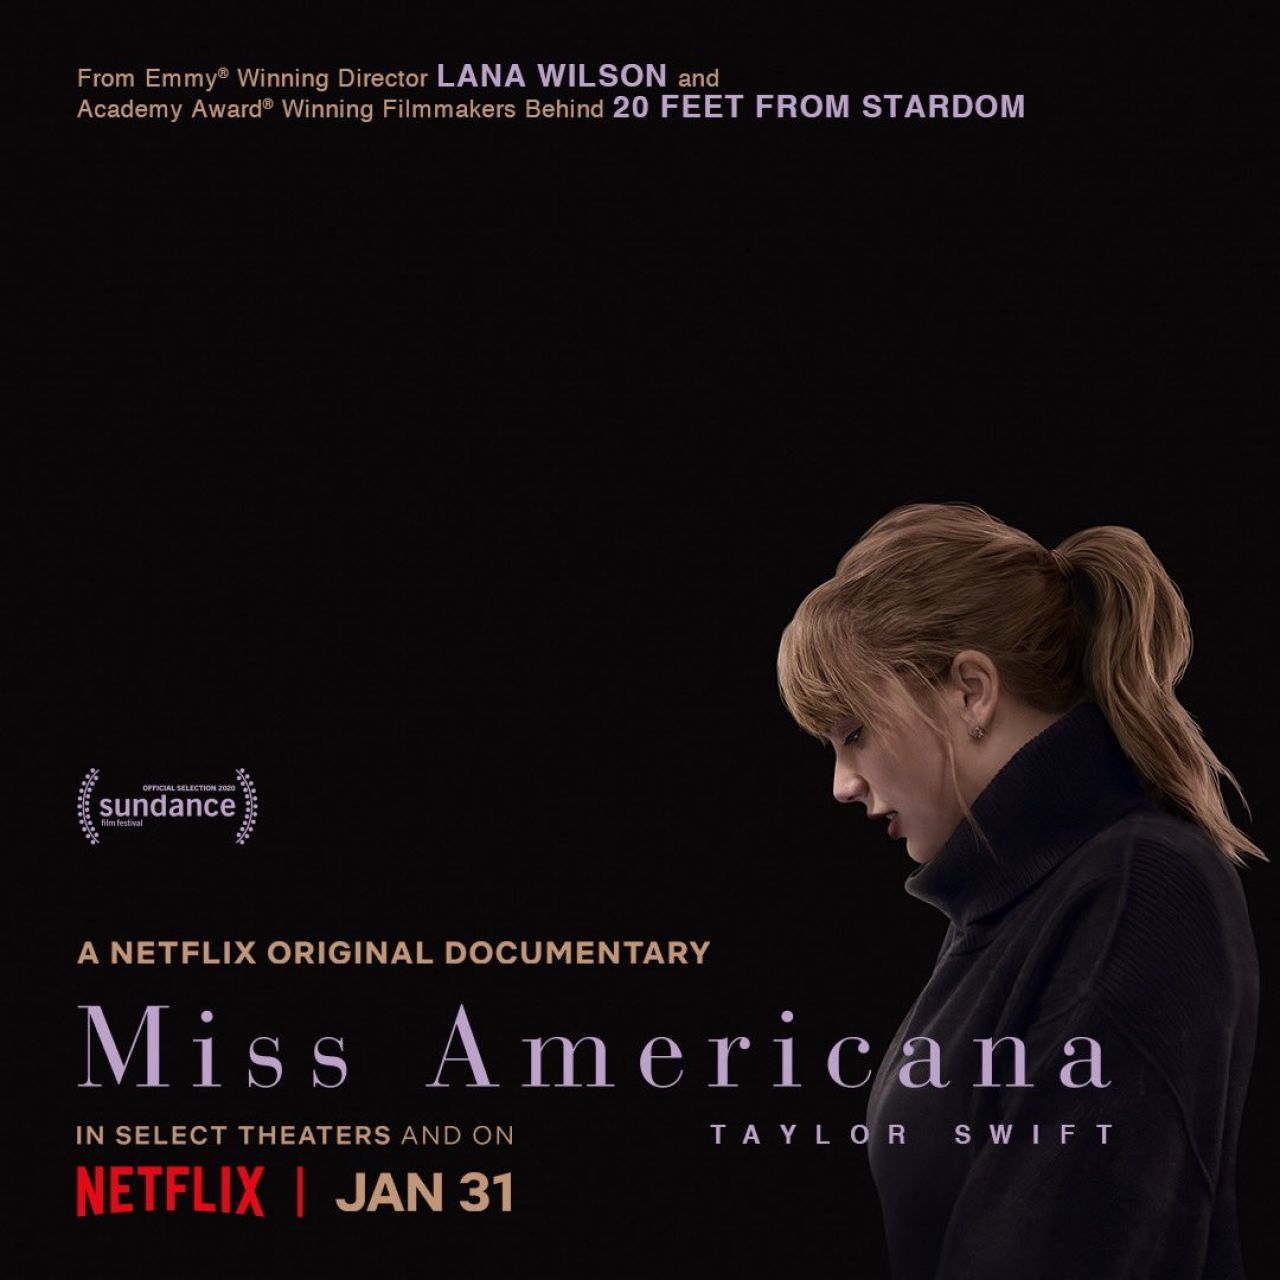 Taylor Swift documentary “Miss Americana” drops on Netflix Jan 31, 2020